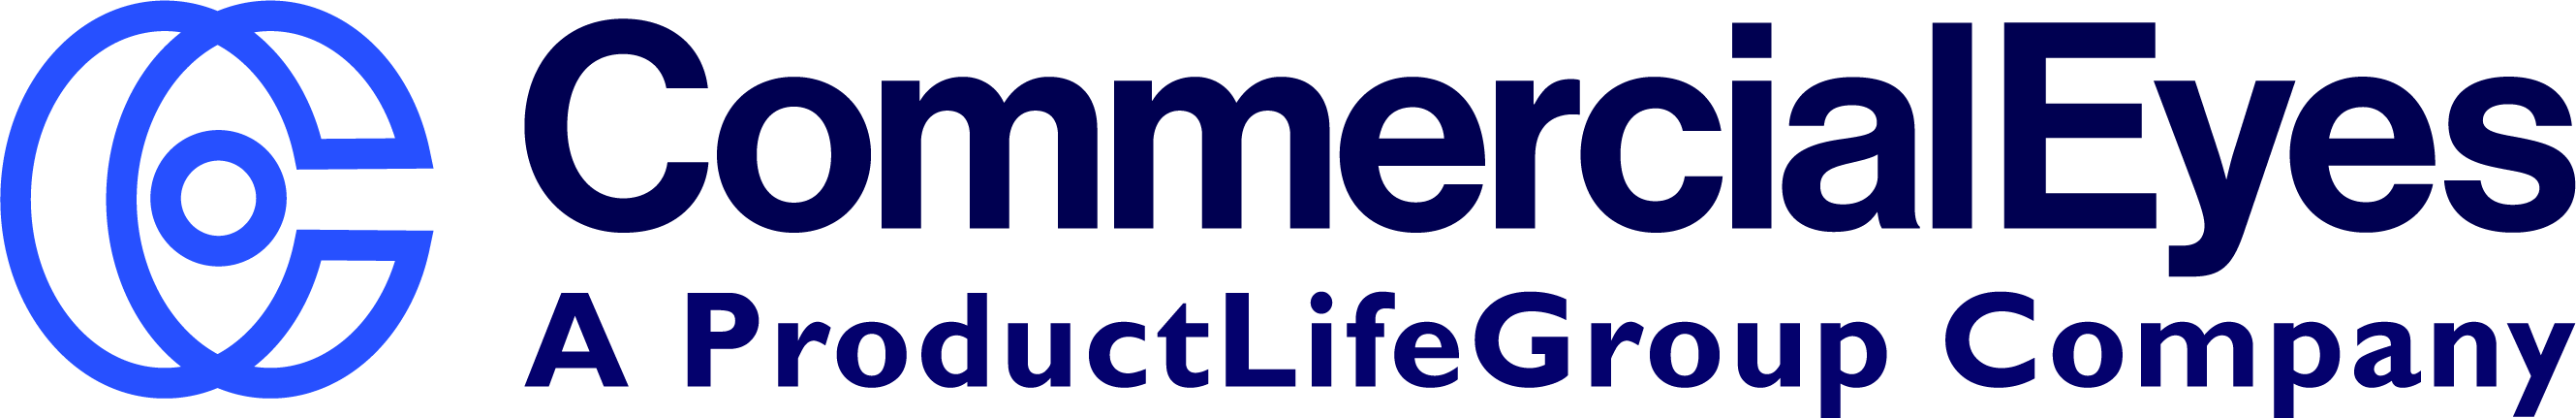 Commercial Eyes Logo